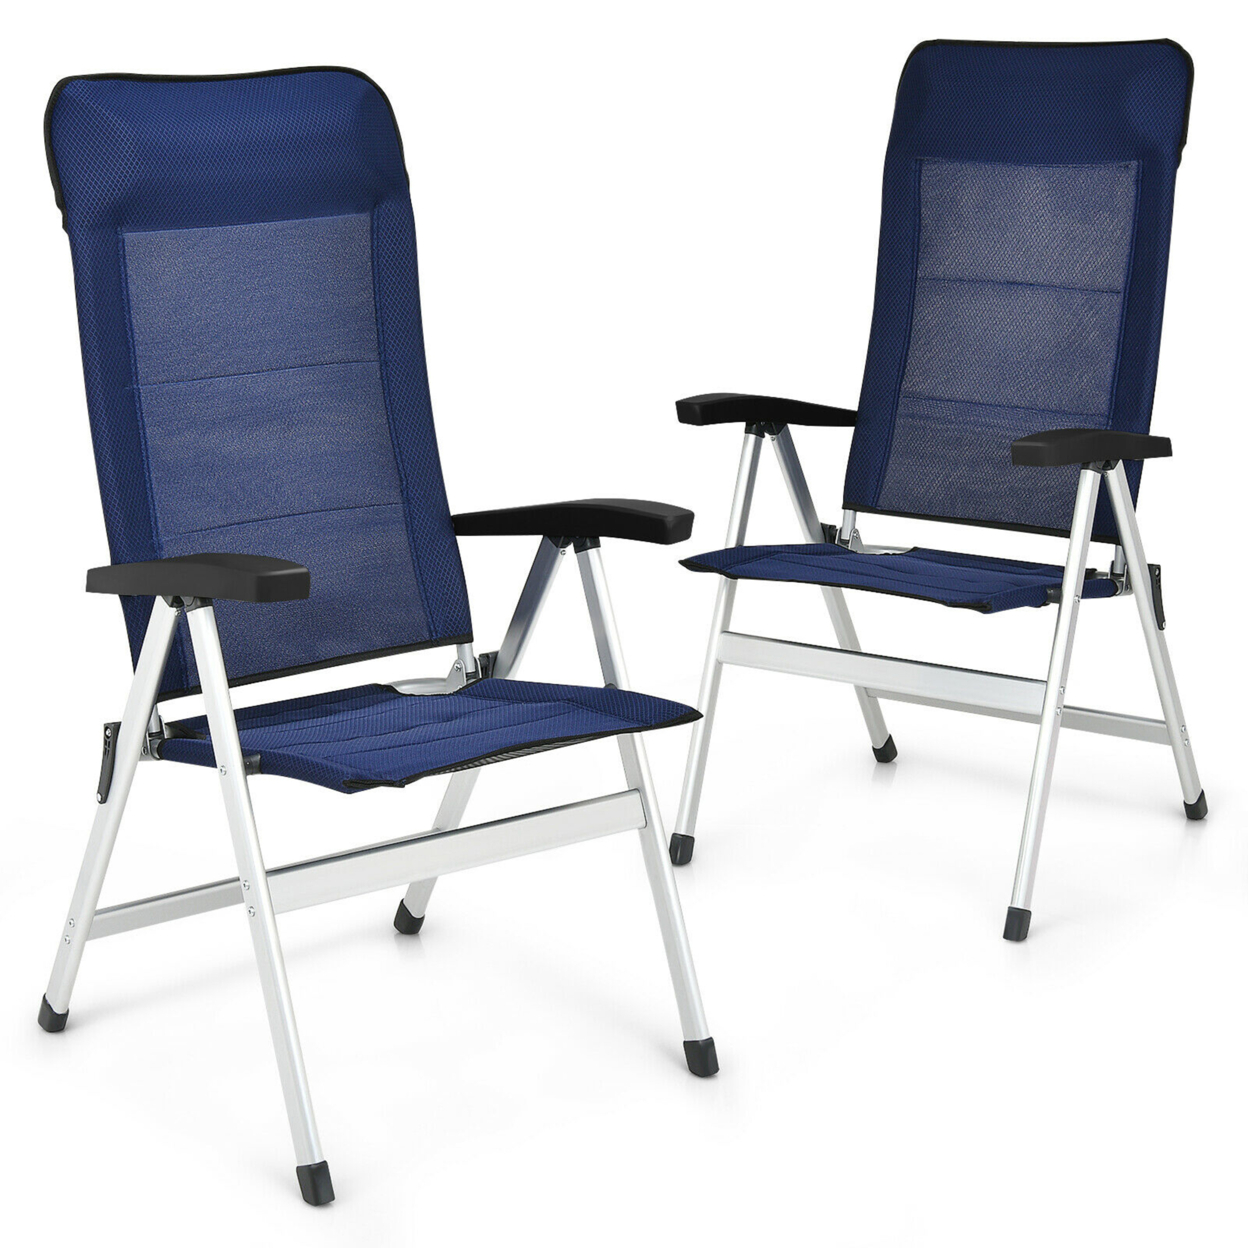 2PCS Patio Dining Chair Aluminum Camping Adjust Portable Headrest Navy